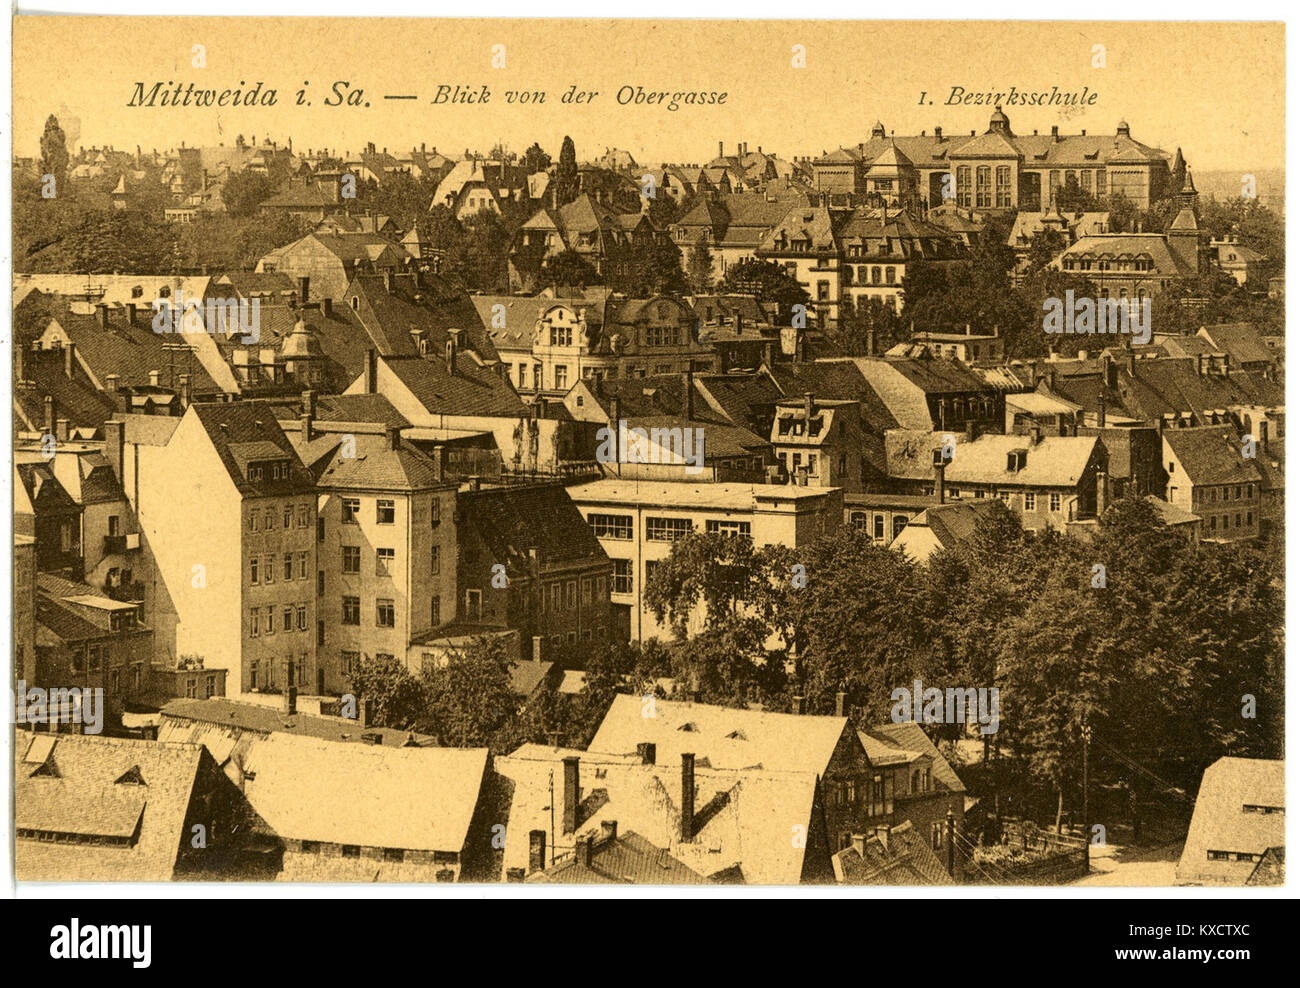 21828 - Mittweida-1921 - Blick von der Obergasse in Mittweida-Brück&Sohn Kunstverlag Stockfoto